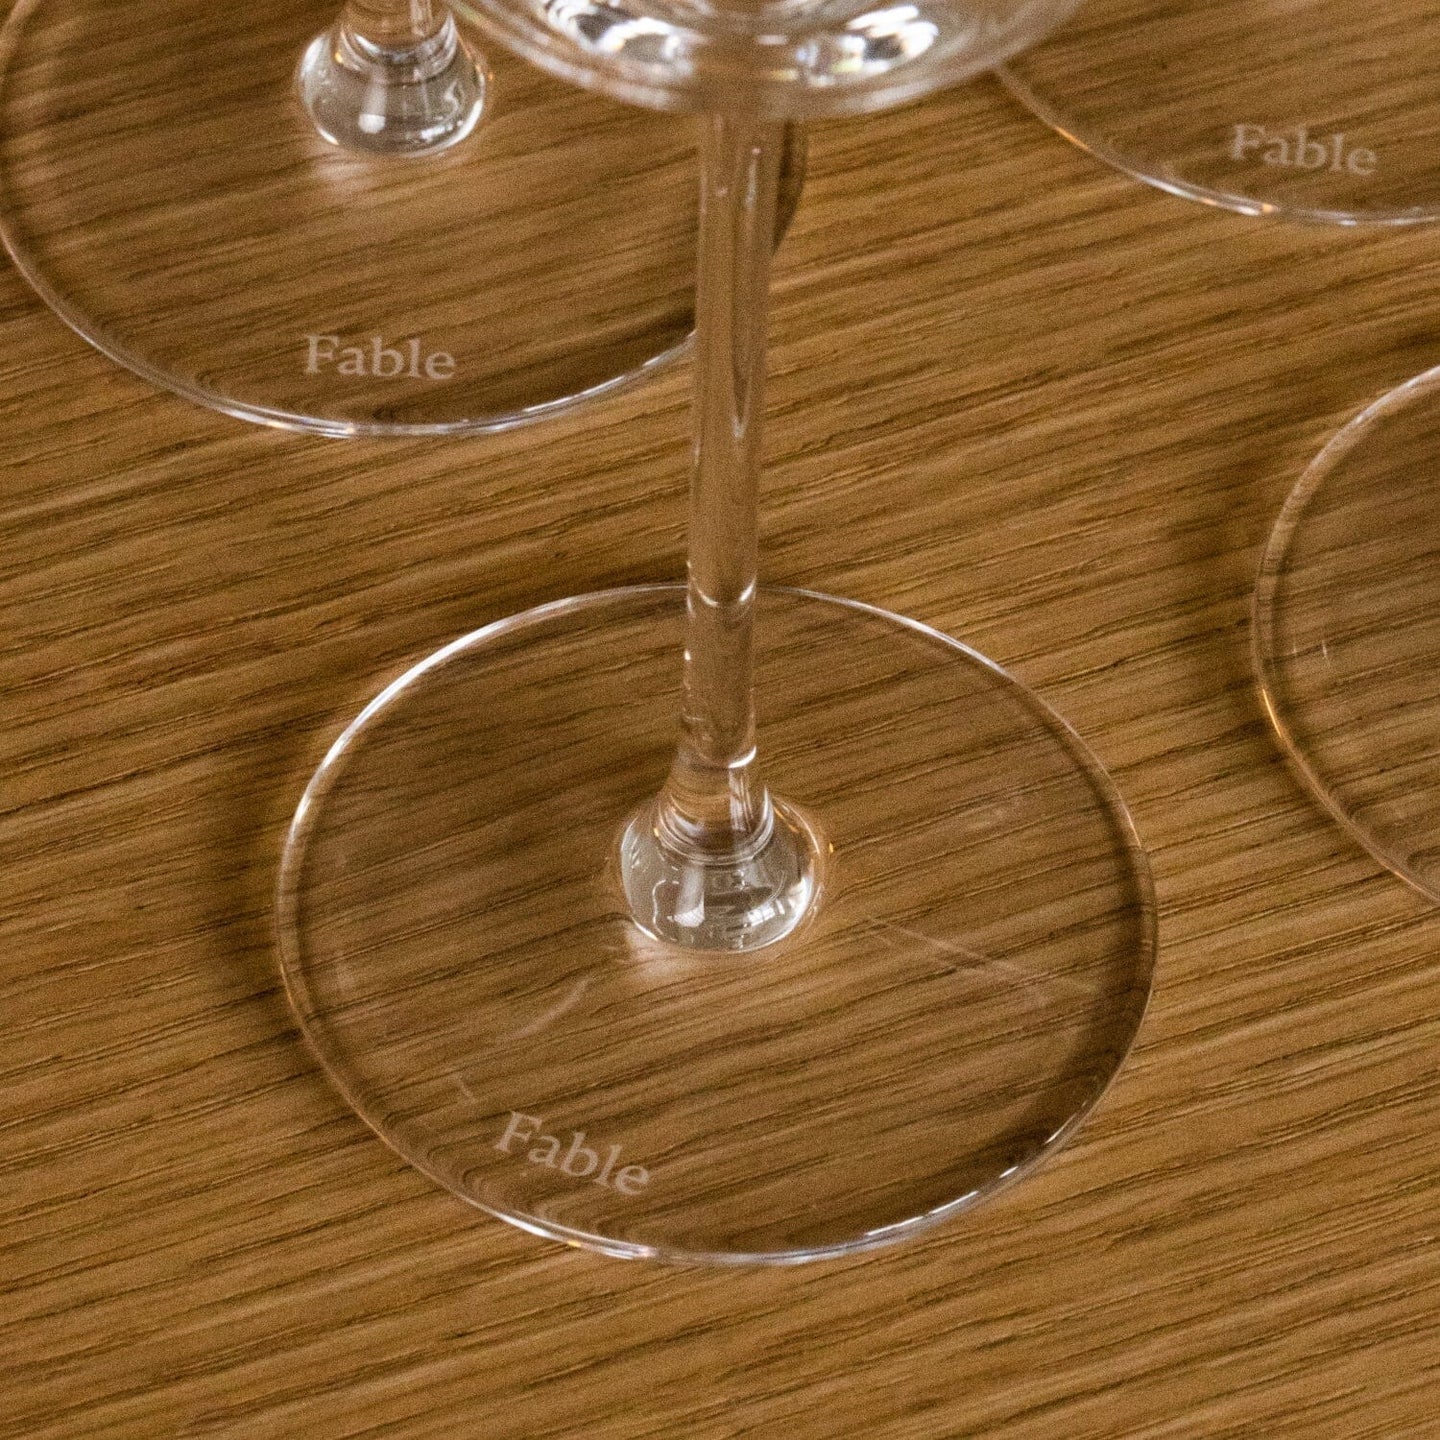 Fable Flute Glasses - Set of 4